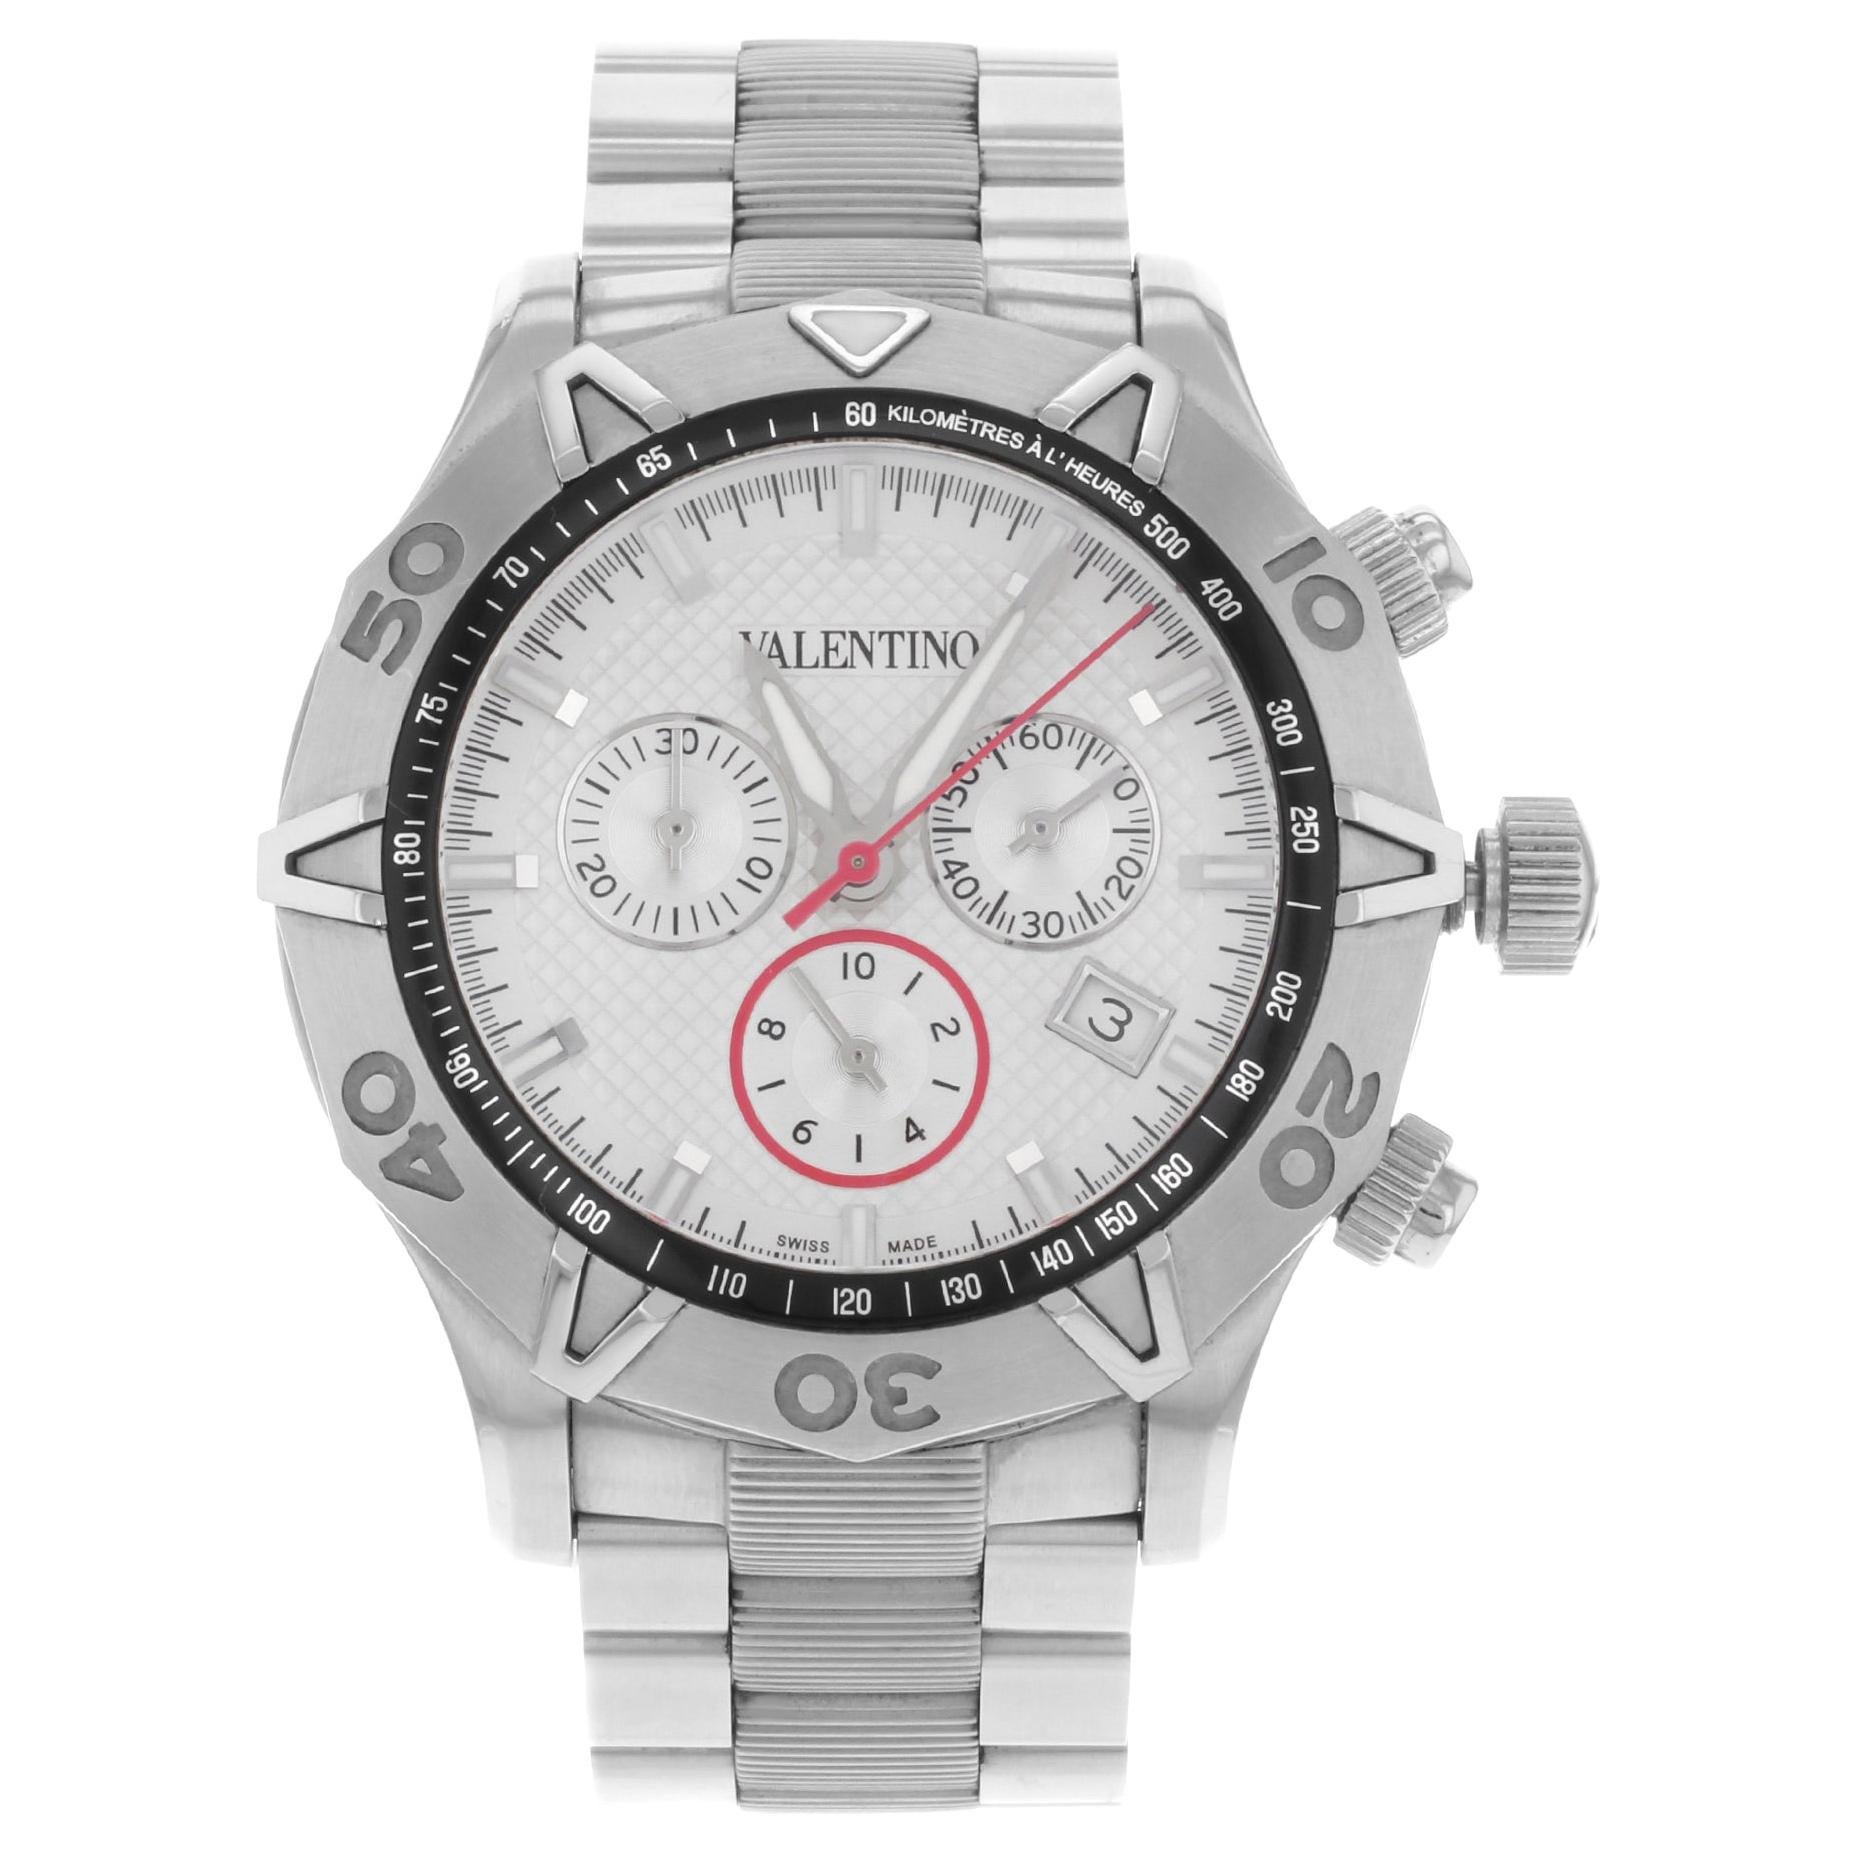 Valentino Homme Stainless Steel White Dial Quartz Men’s Watch V40LCQ9902-S099